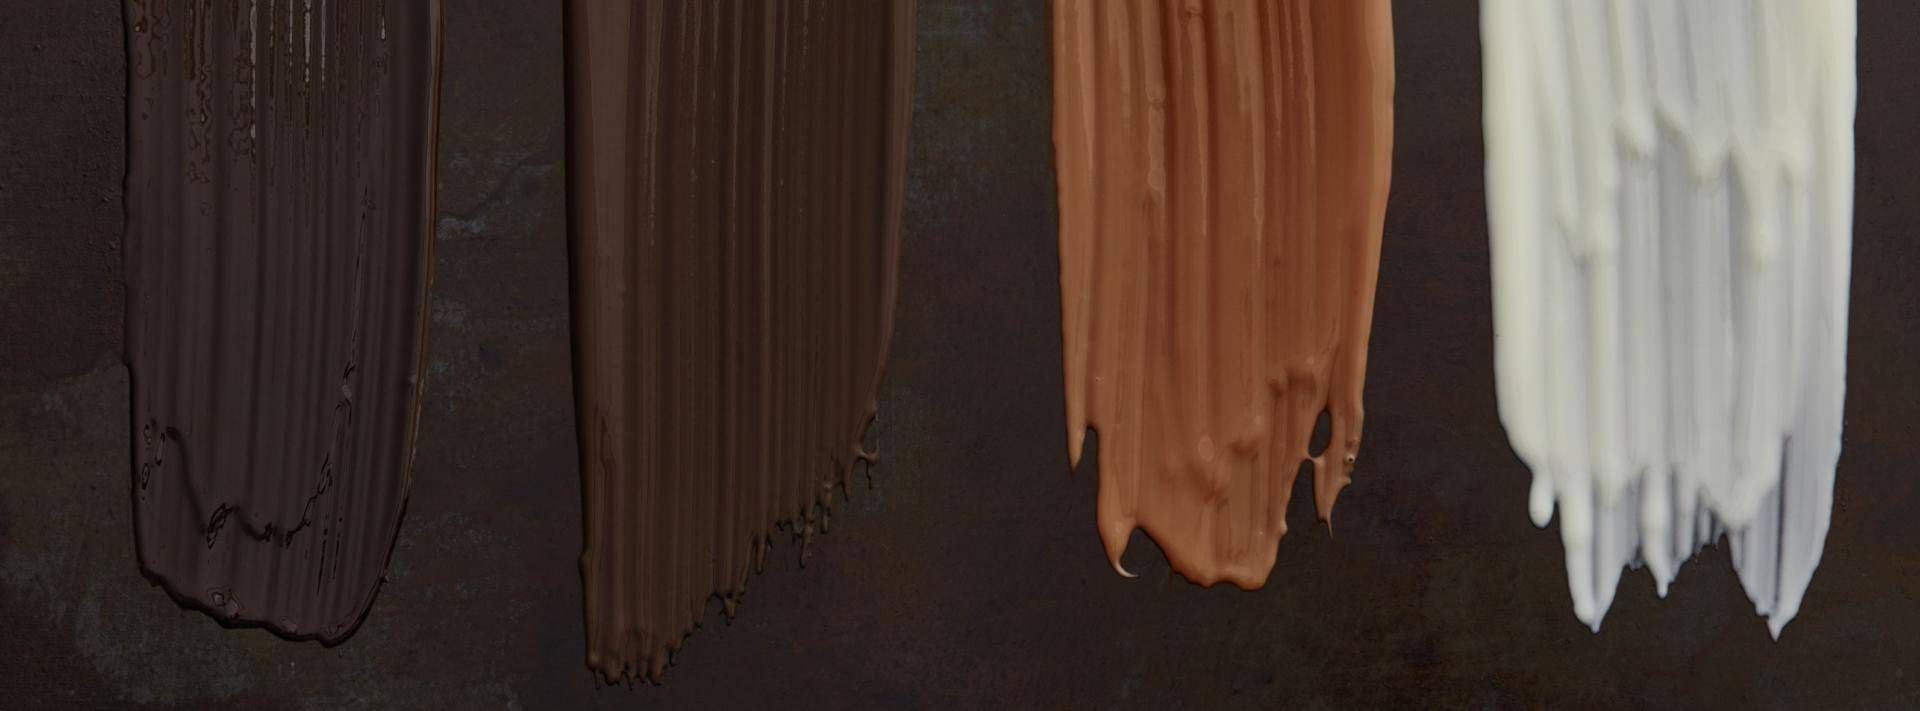 four swipes of chocolate on dark background